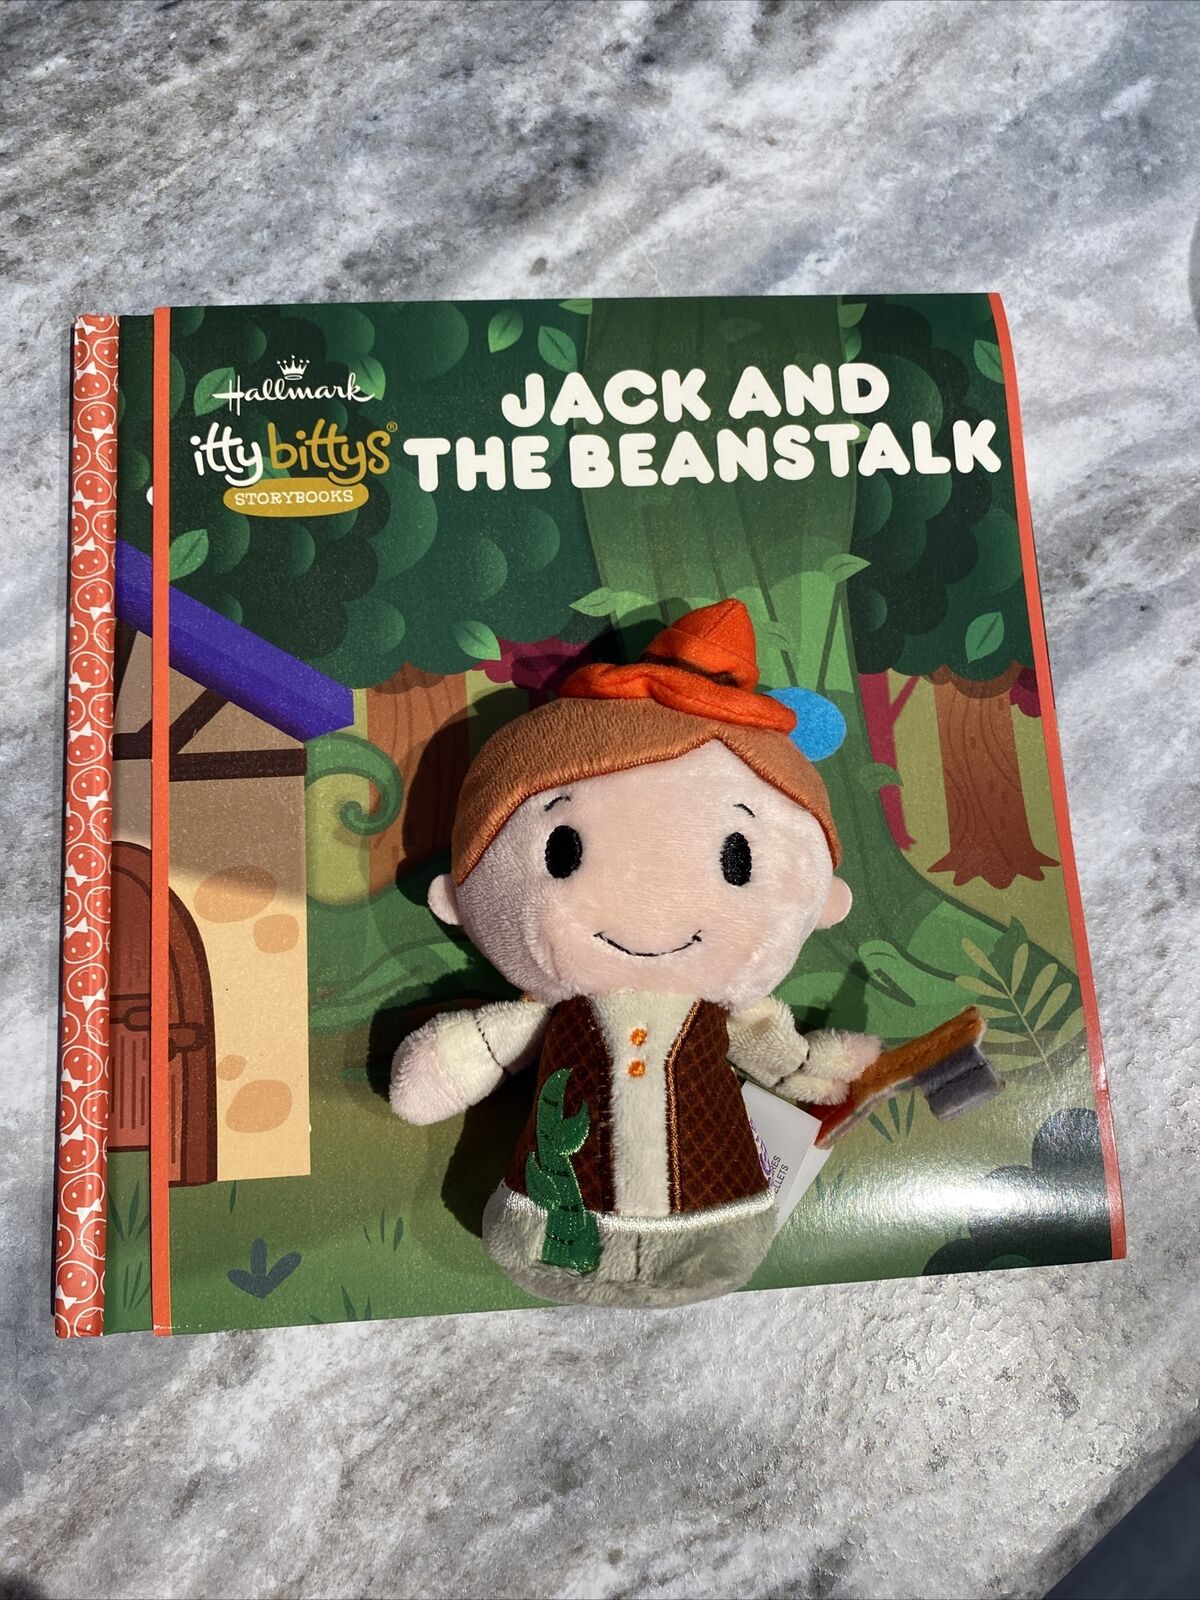 Hallmark Itty Bittys Jack and the Beanstalk Storybook & Plush Toy New